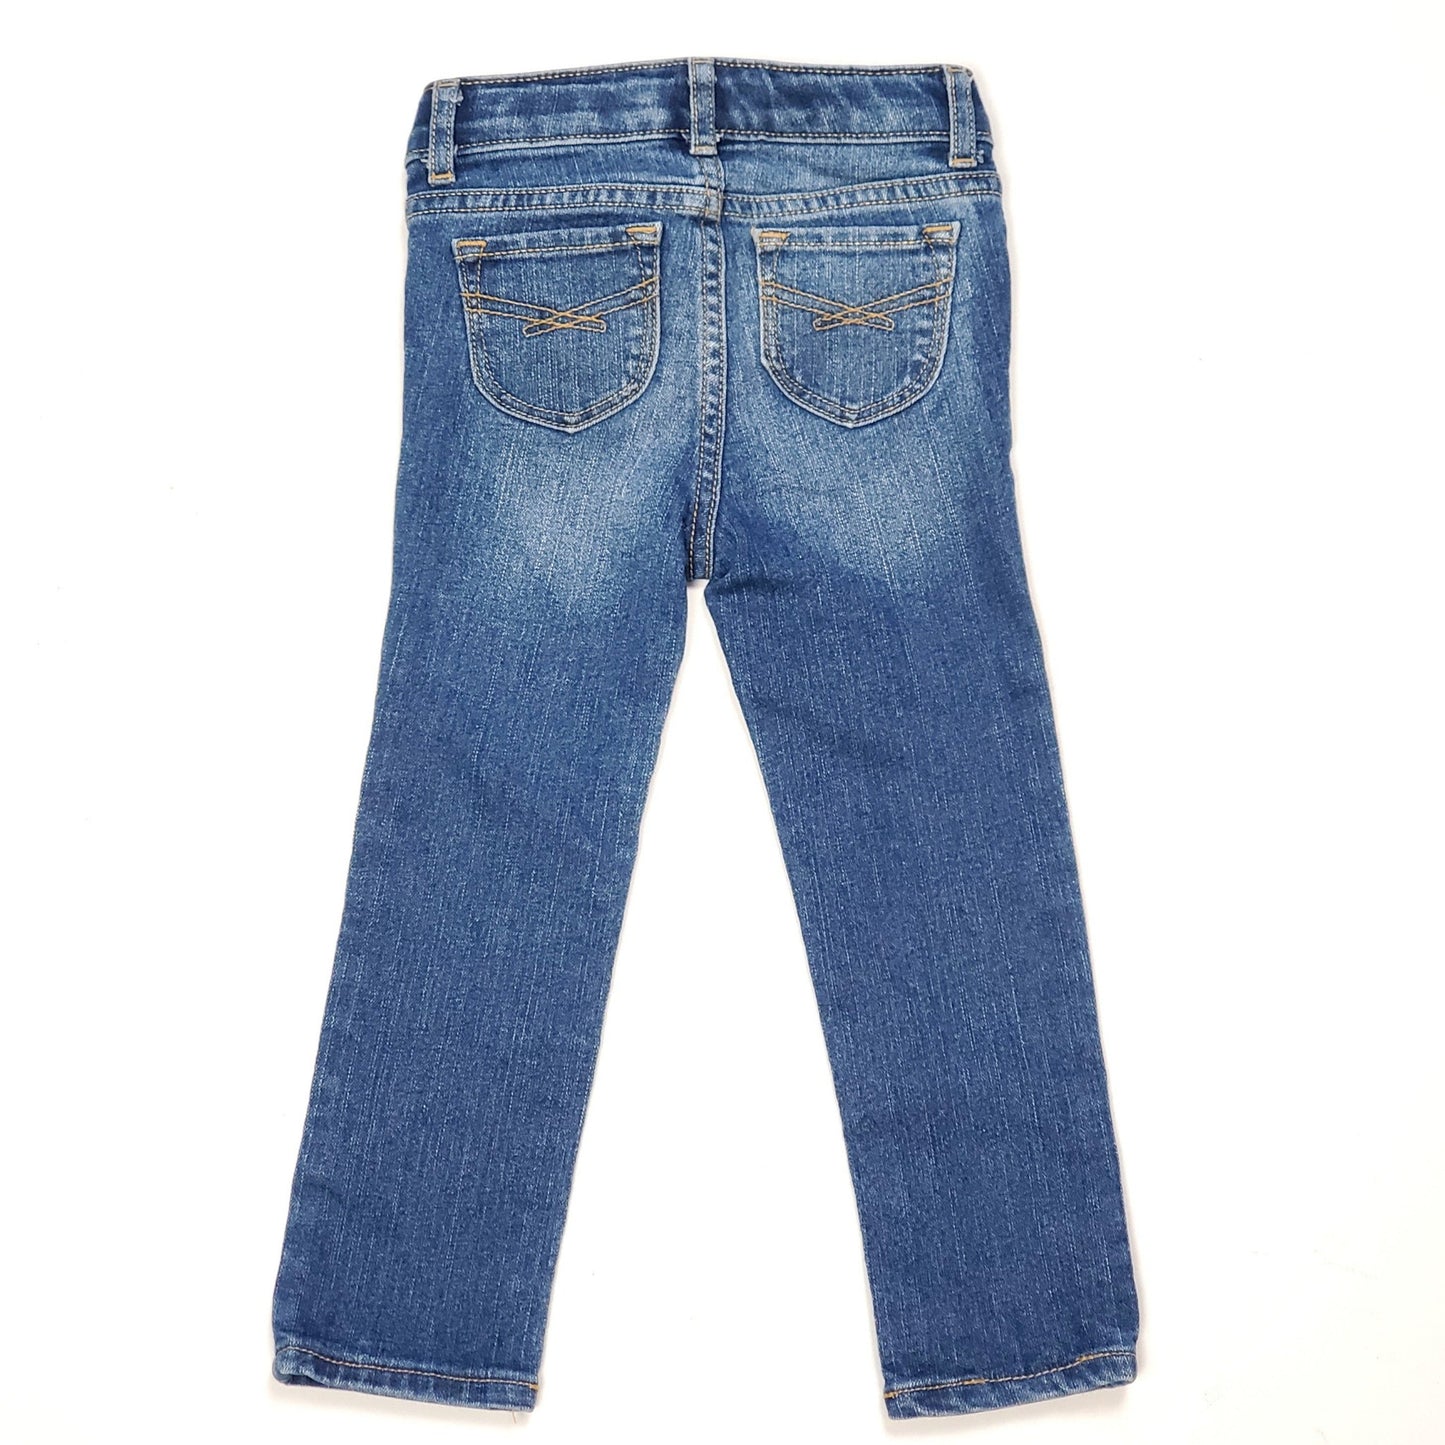 Baby Gap Girls Medium Wash Skinny Jeans 3T Used, back